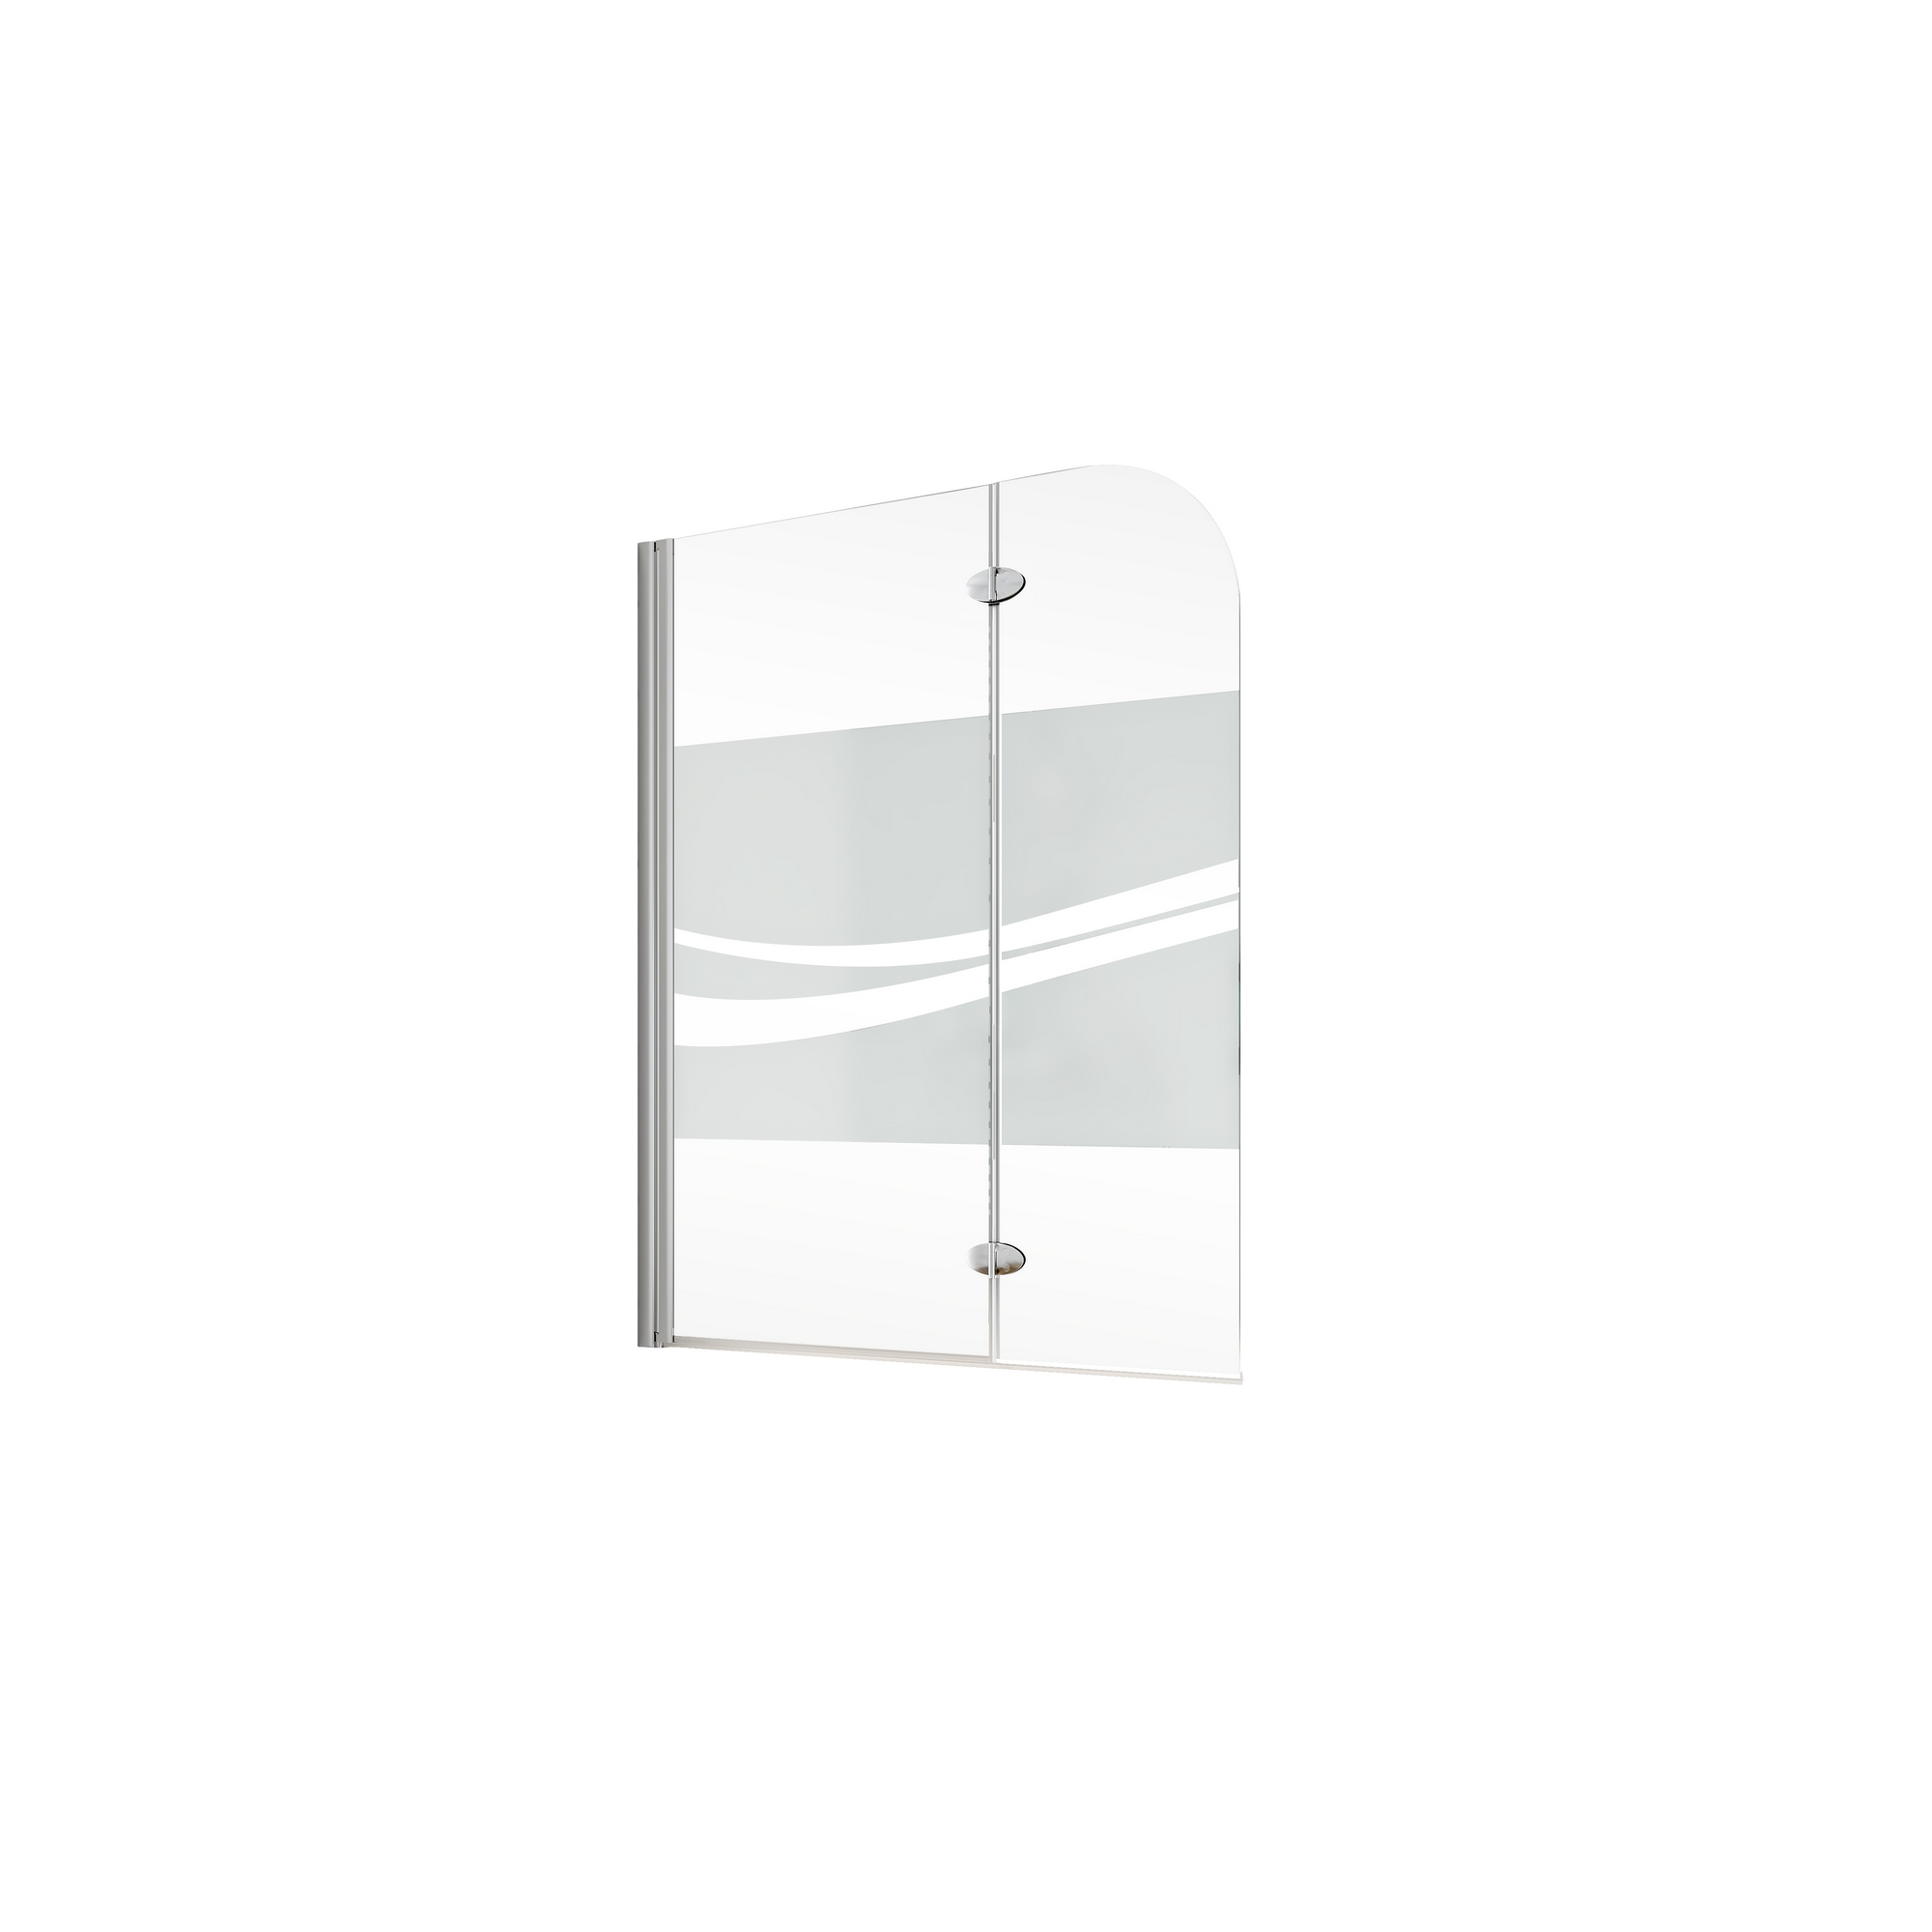 Badewannenfaltwand 2-teilig 'Komfort' Echtglas Dekor Liane, Chromoptik  114 x 140 cm + product picture